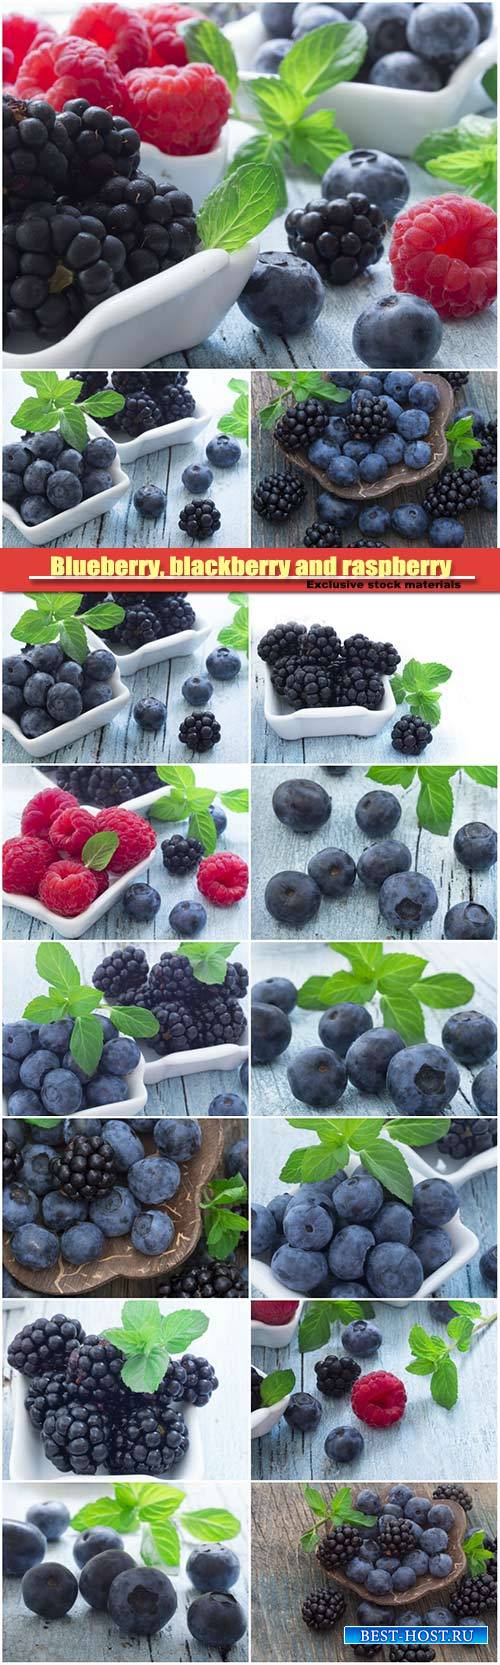 Blueberry, blackberry and raspberry